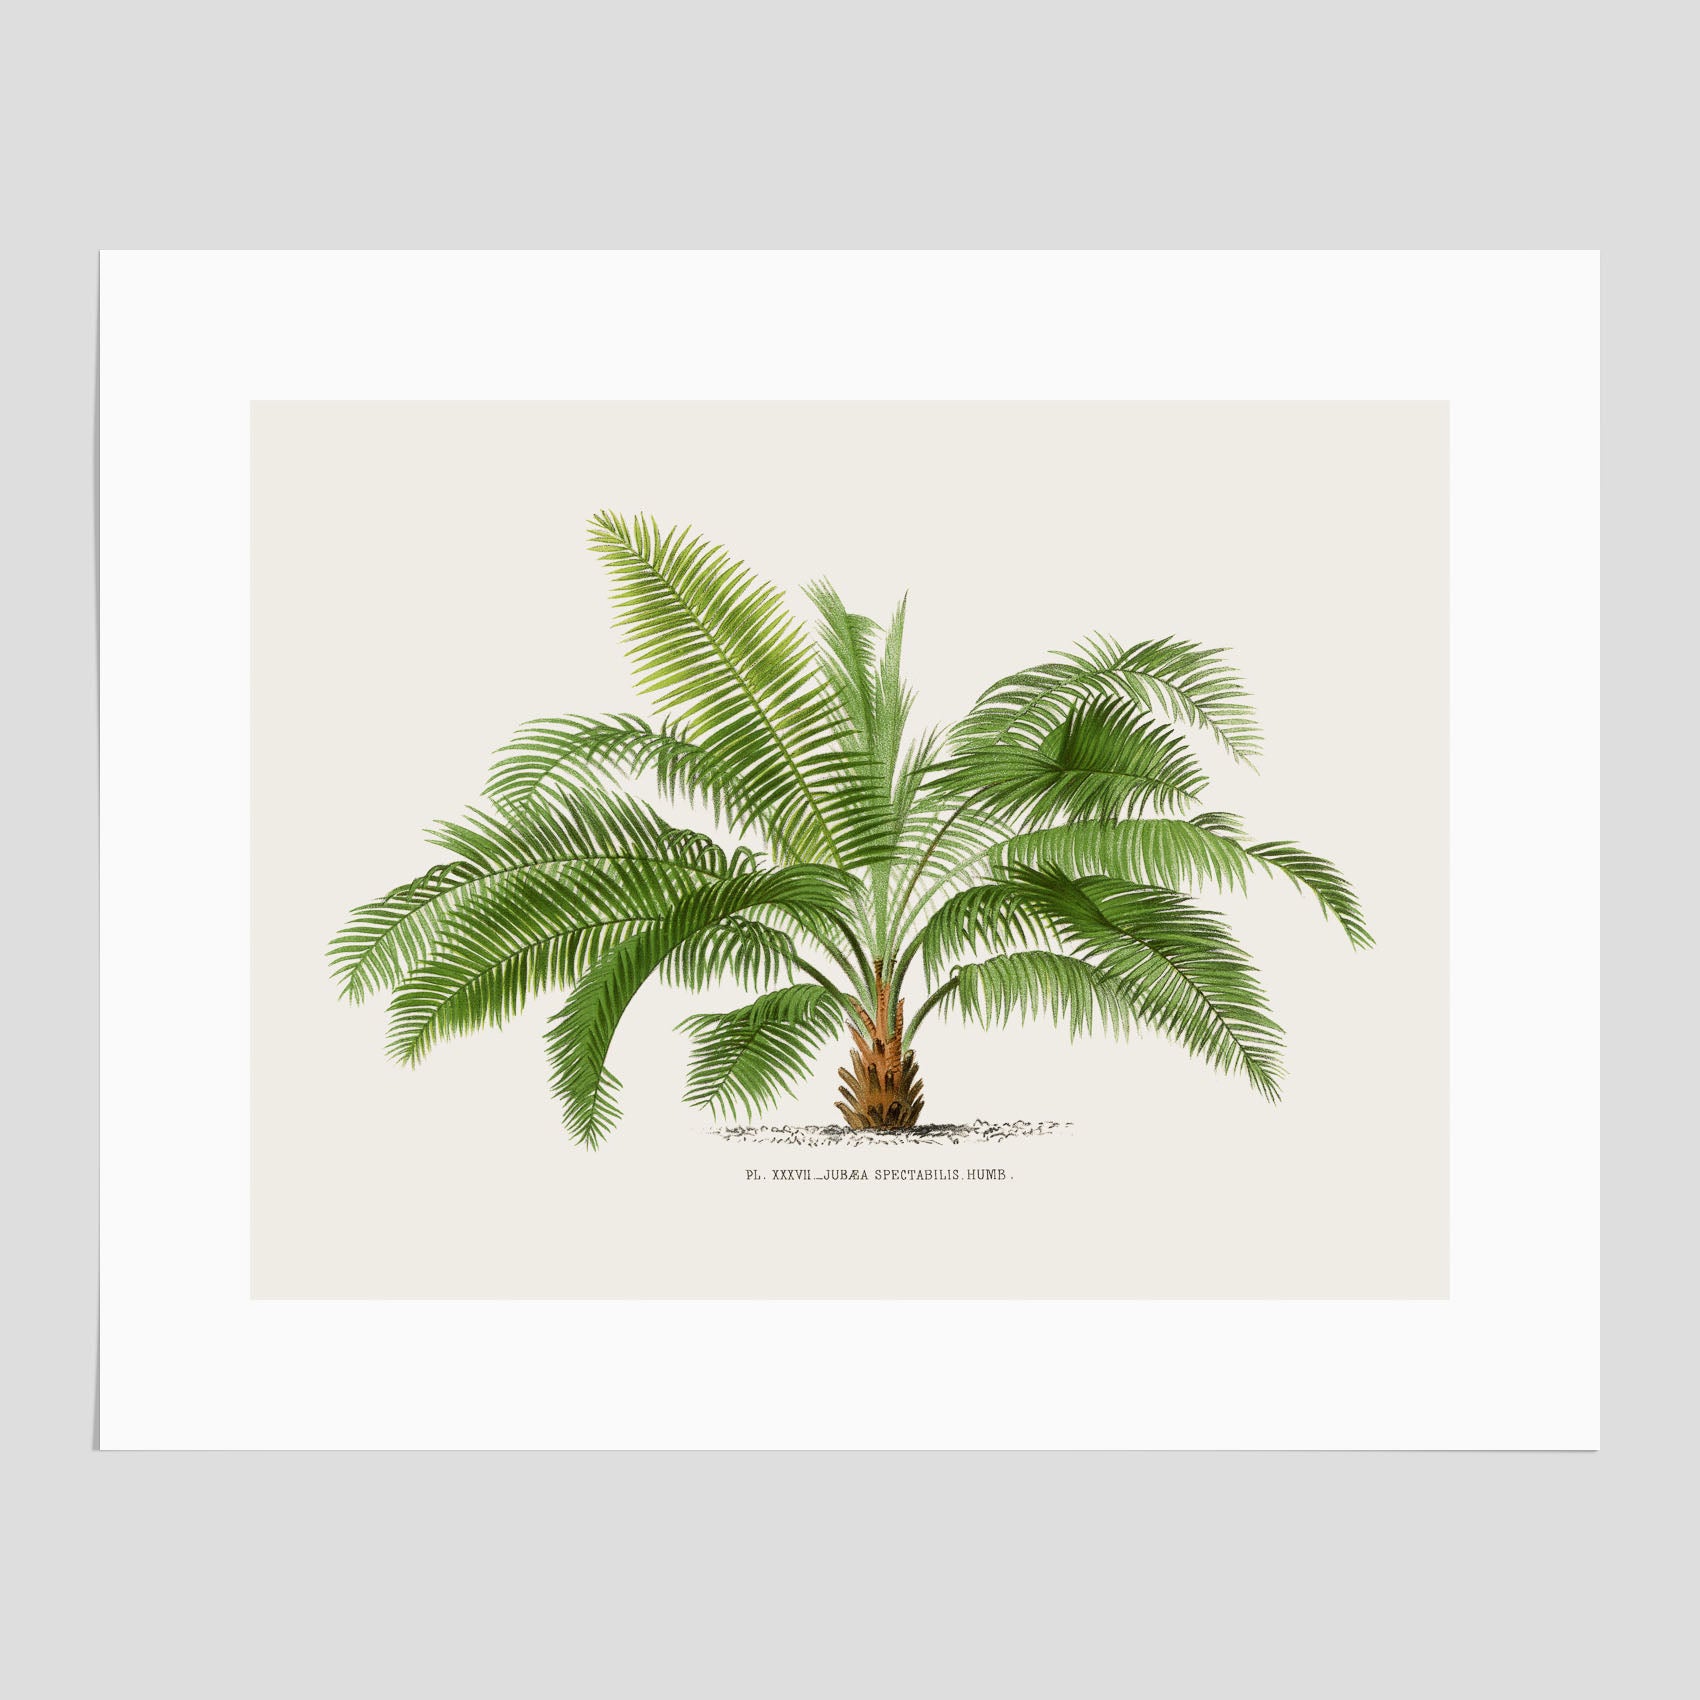 Botanisk vintageposter med en illustration av ett palmträd, ritad av Pieter Joseph de Pannemaeker